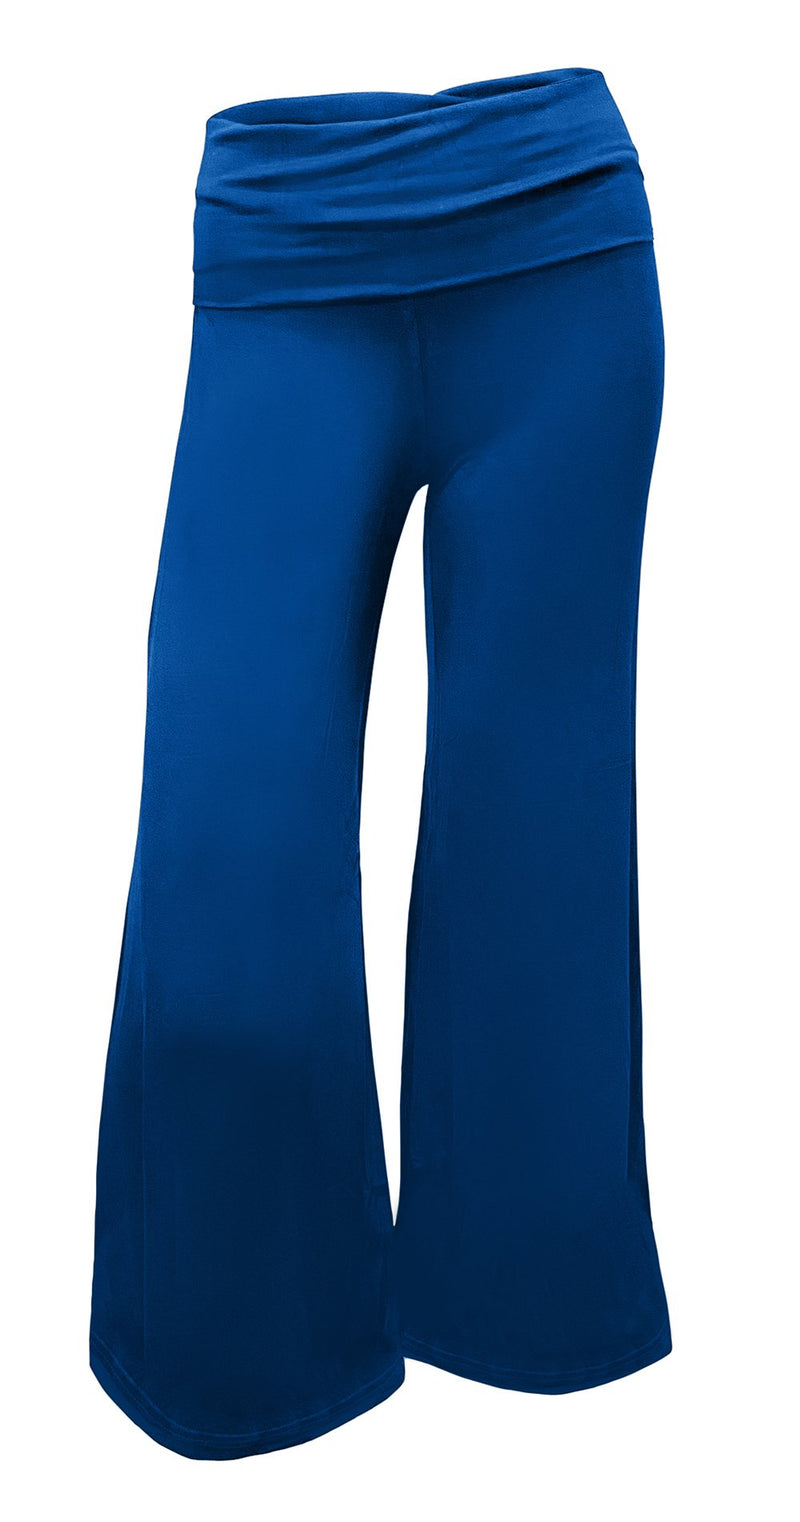 SANTORINI BLUE 100% Modal Eco Friendly Pant